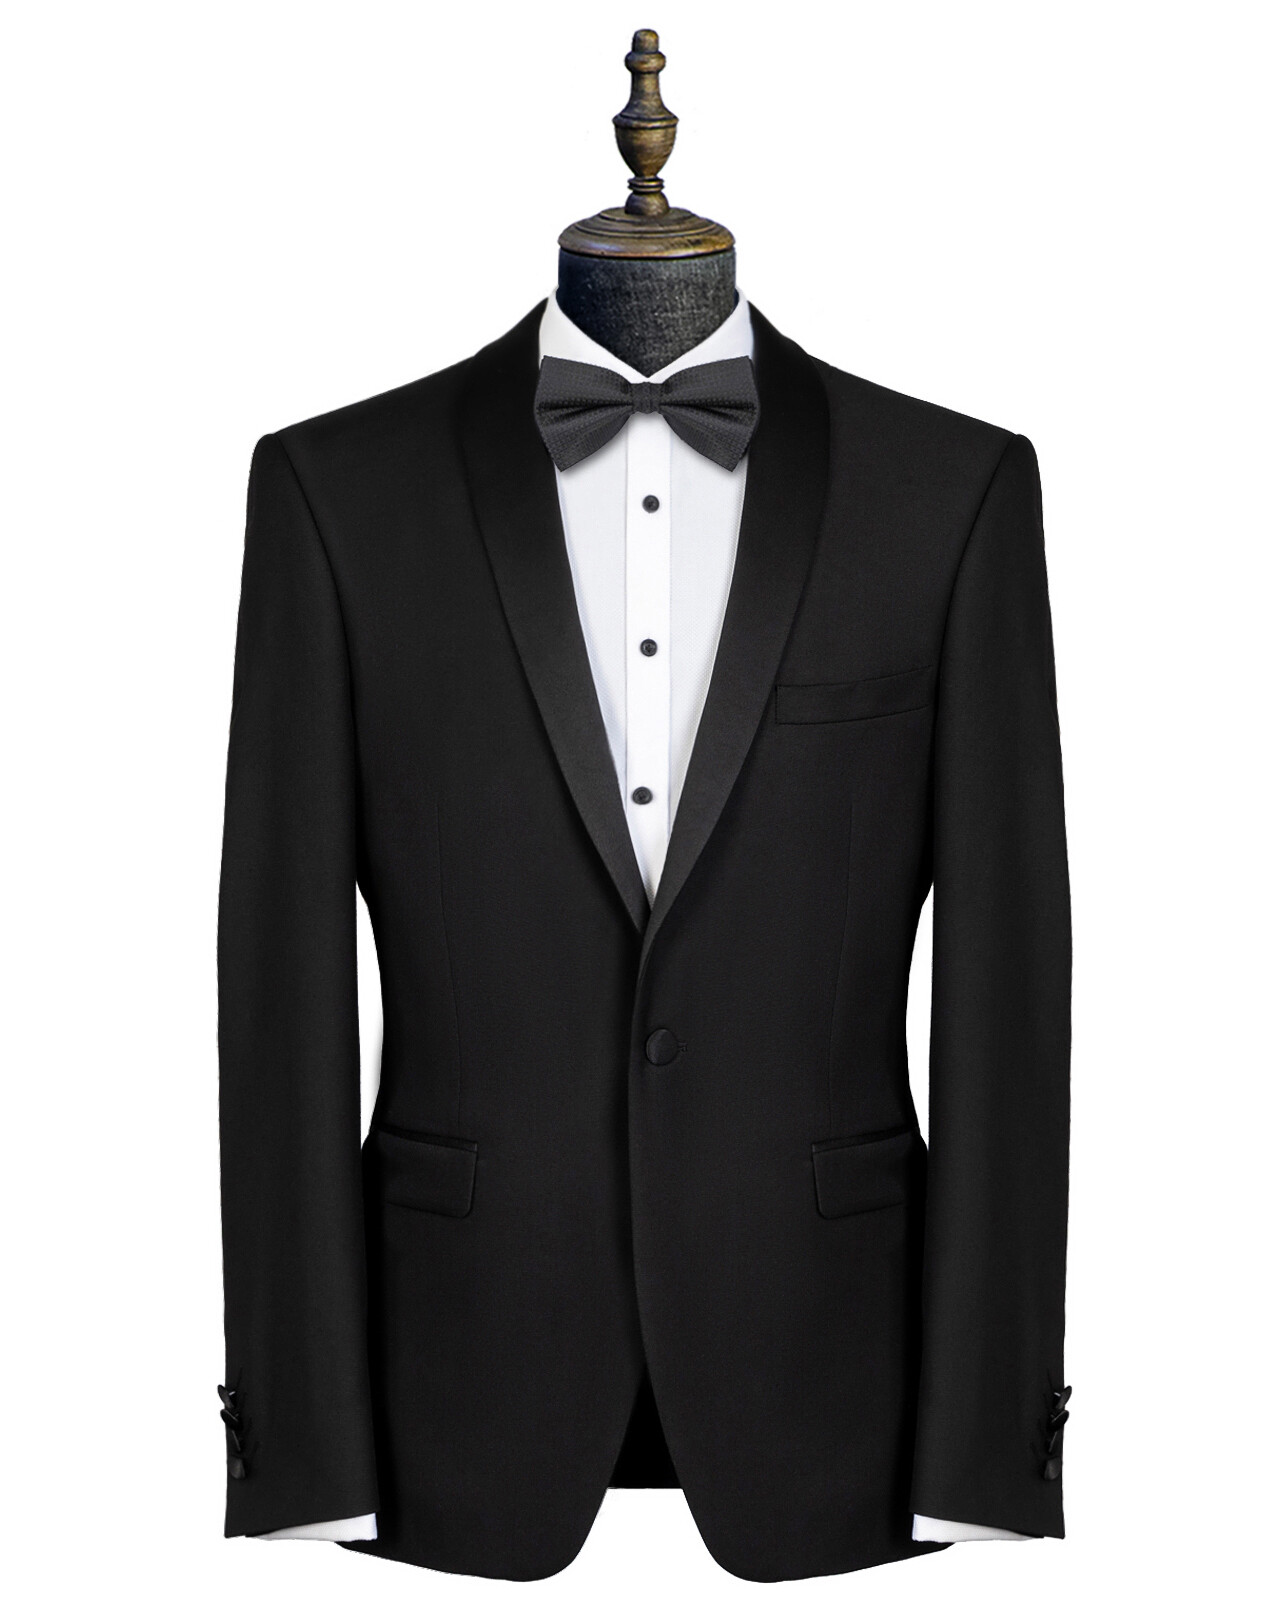 Bruton Black Tuxedo - Hire or Buy